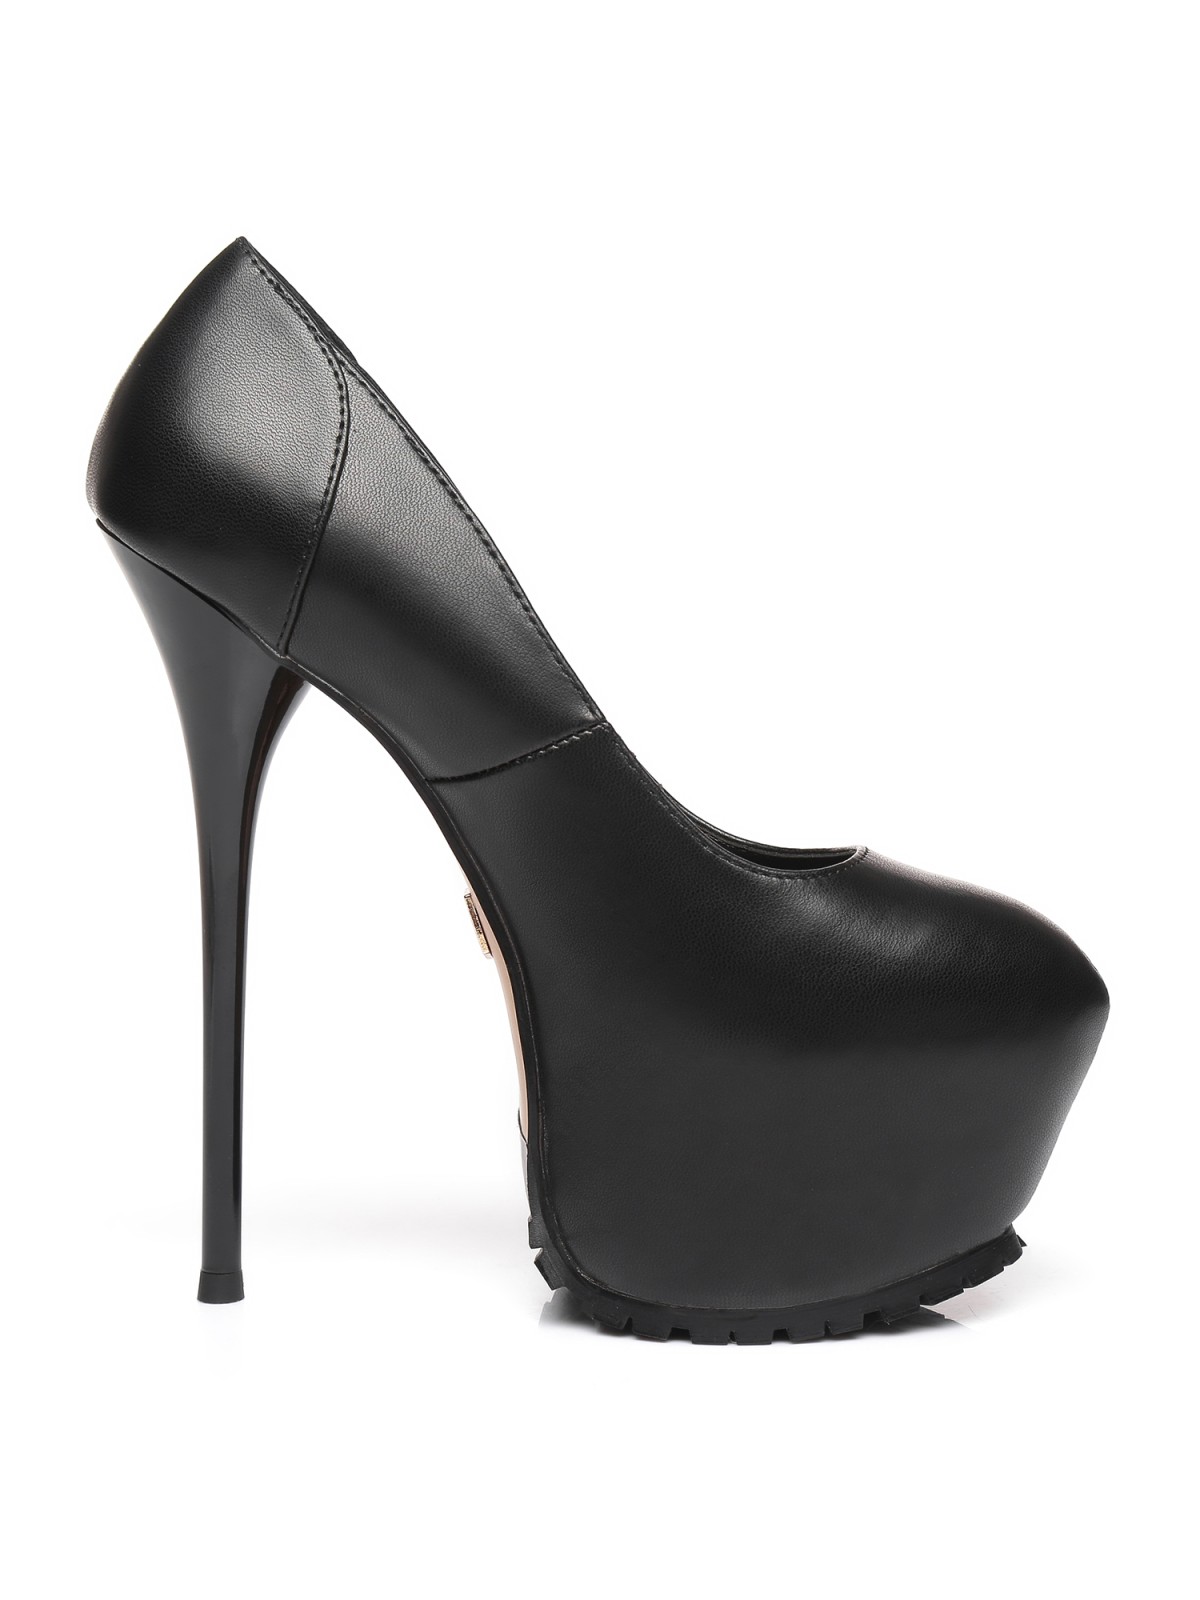 Giaro VICKY black platform pumps with stiletto heels